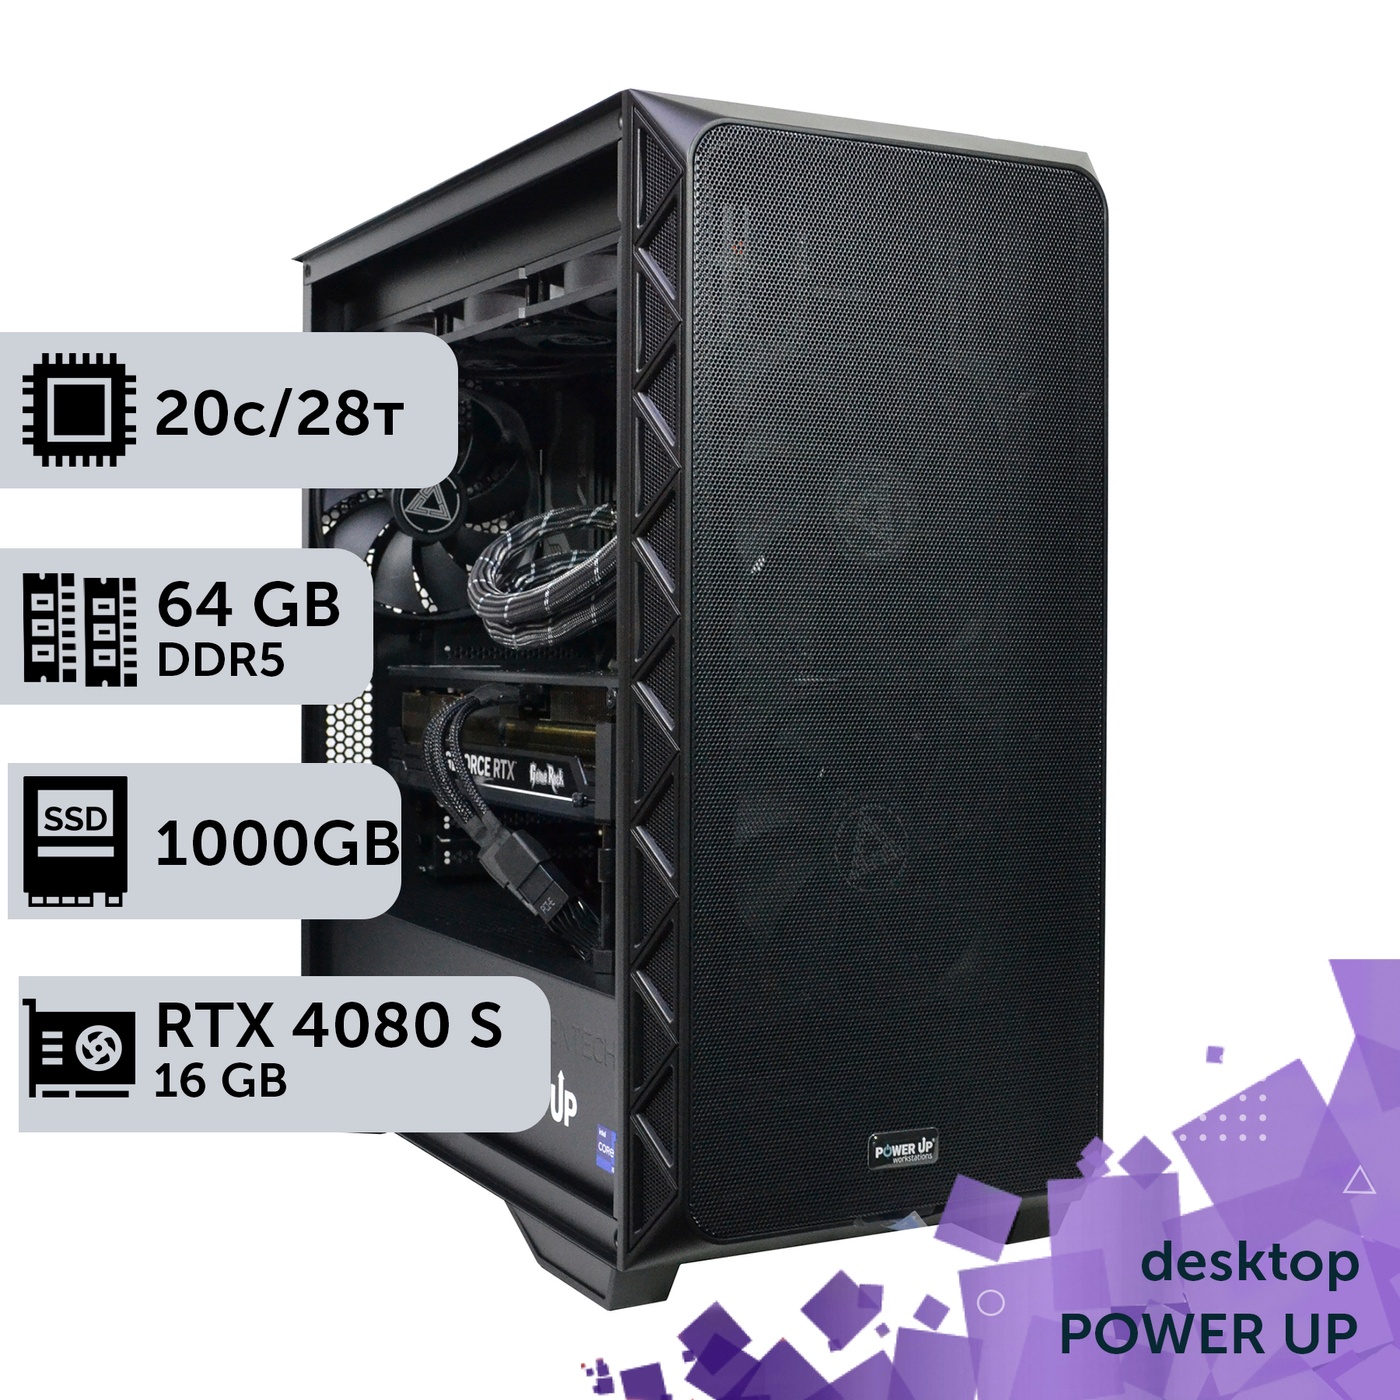 Робоча станція PowerUp Desktop #370 Core i7 14700K/64 GB/SSD 1TB/GeForce RTX 4080 Super 16GB